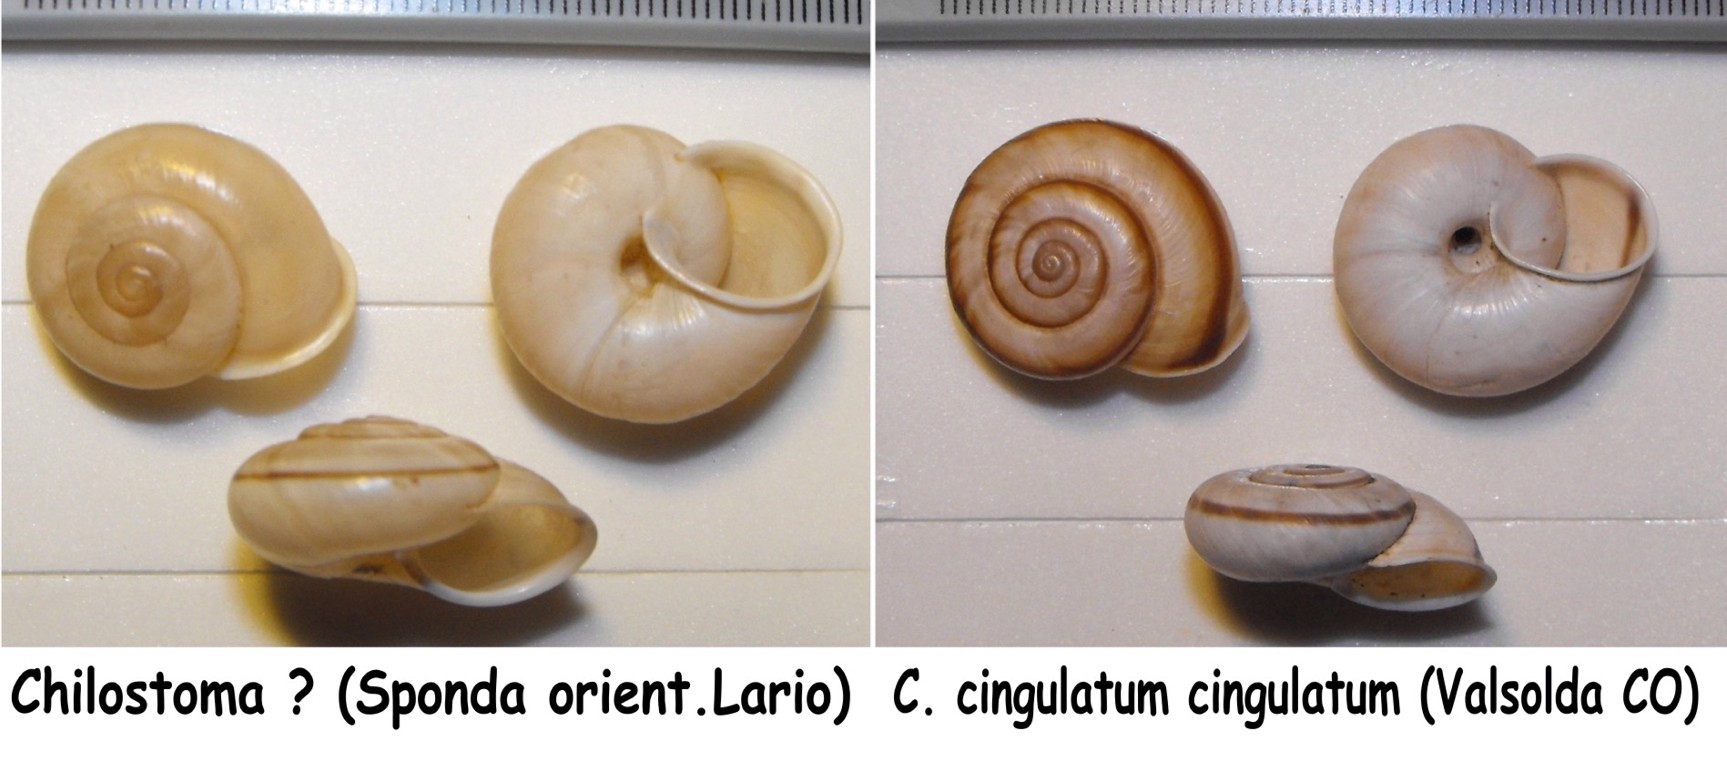 Chilostoma cingulatum dai M.Berici